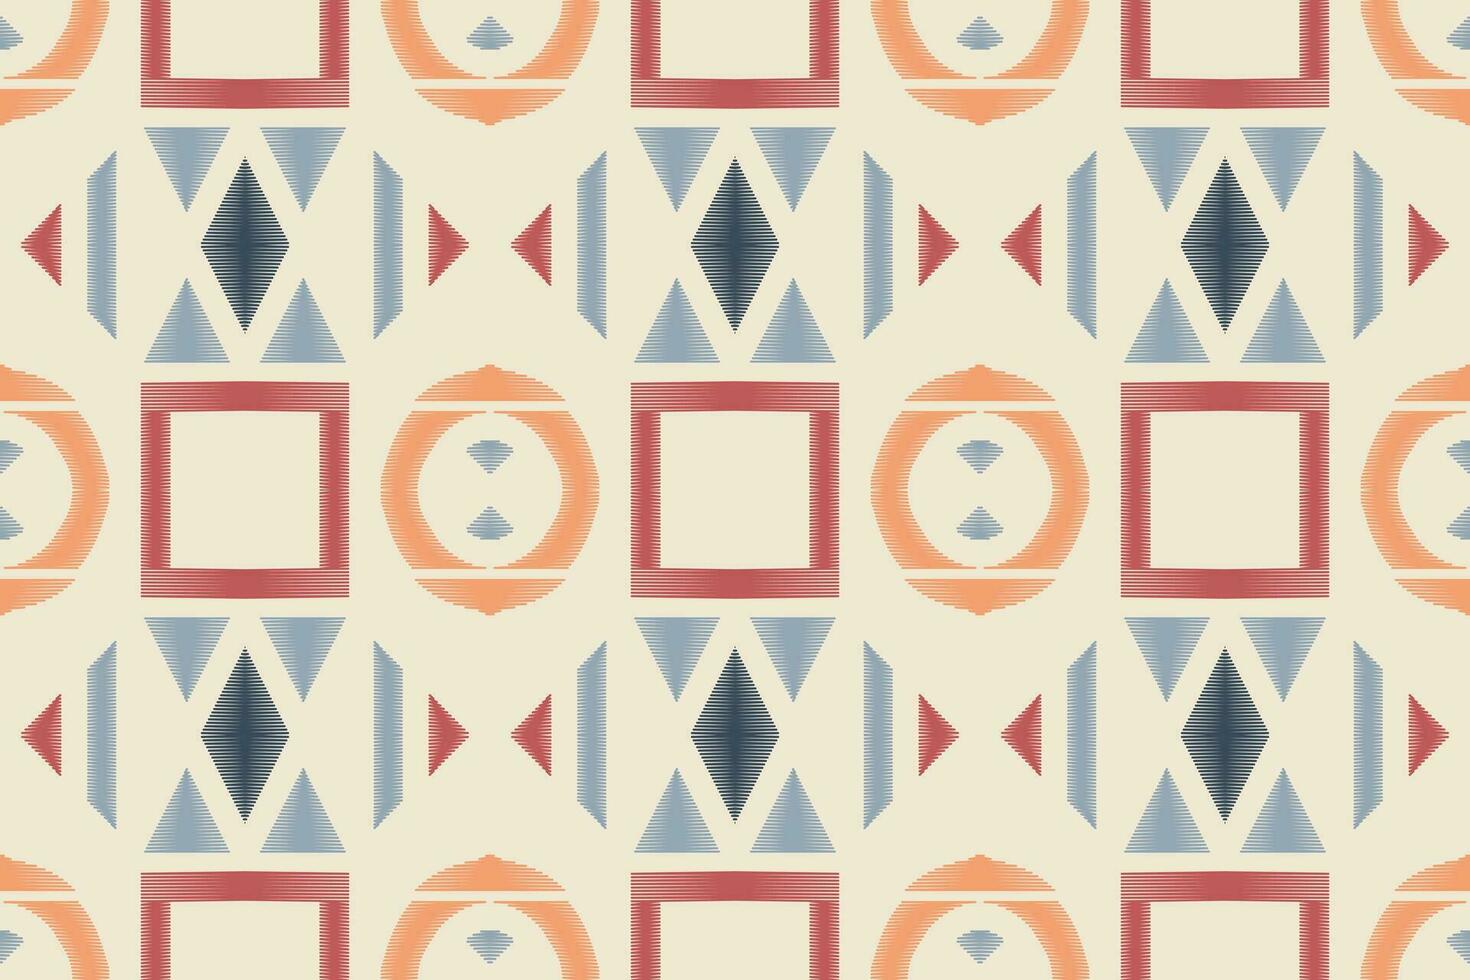 ikat damasco cachemir bordado antecedentes. ikat raya geométrico étnico oriental modelo tradicional. ikat azteca estilo resumen diseño para impresión textura,tela,sari,sari,alfombra. vector